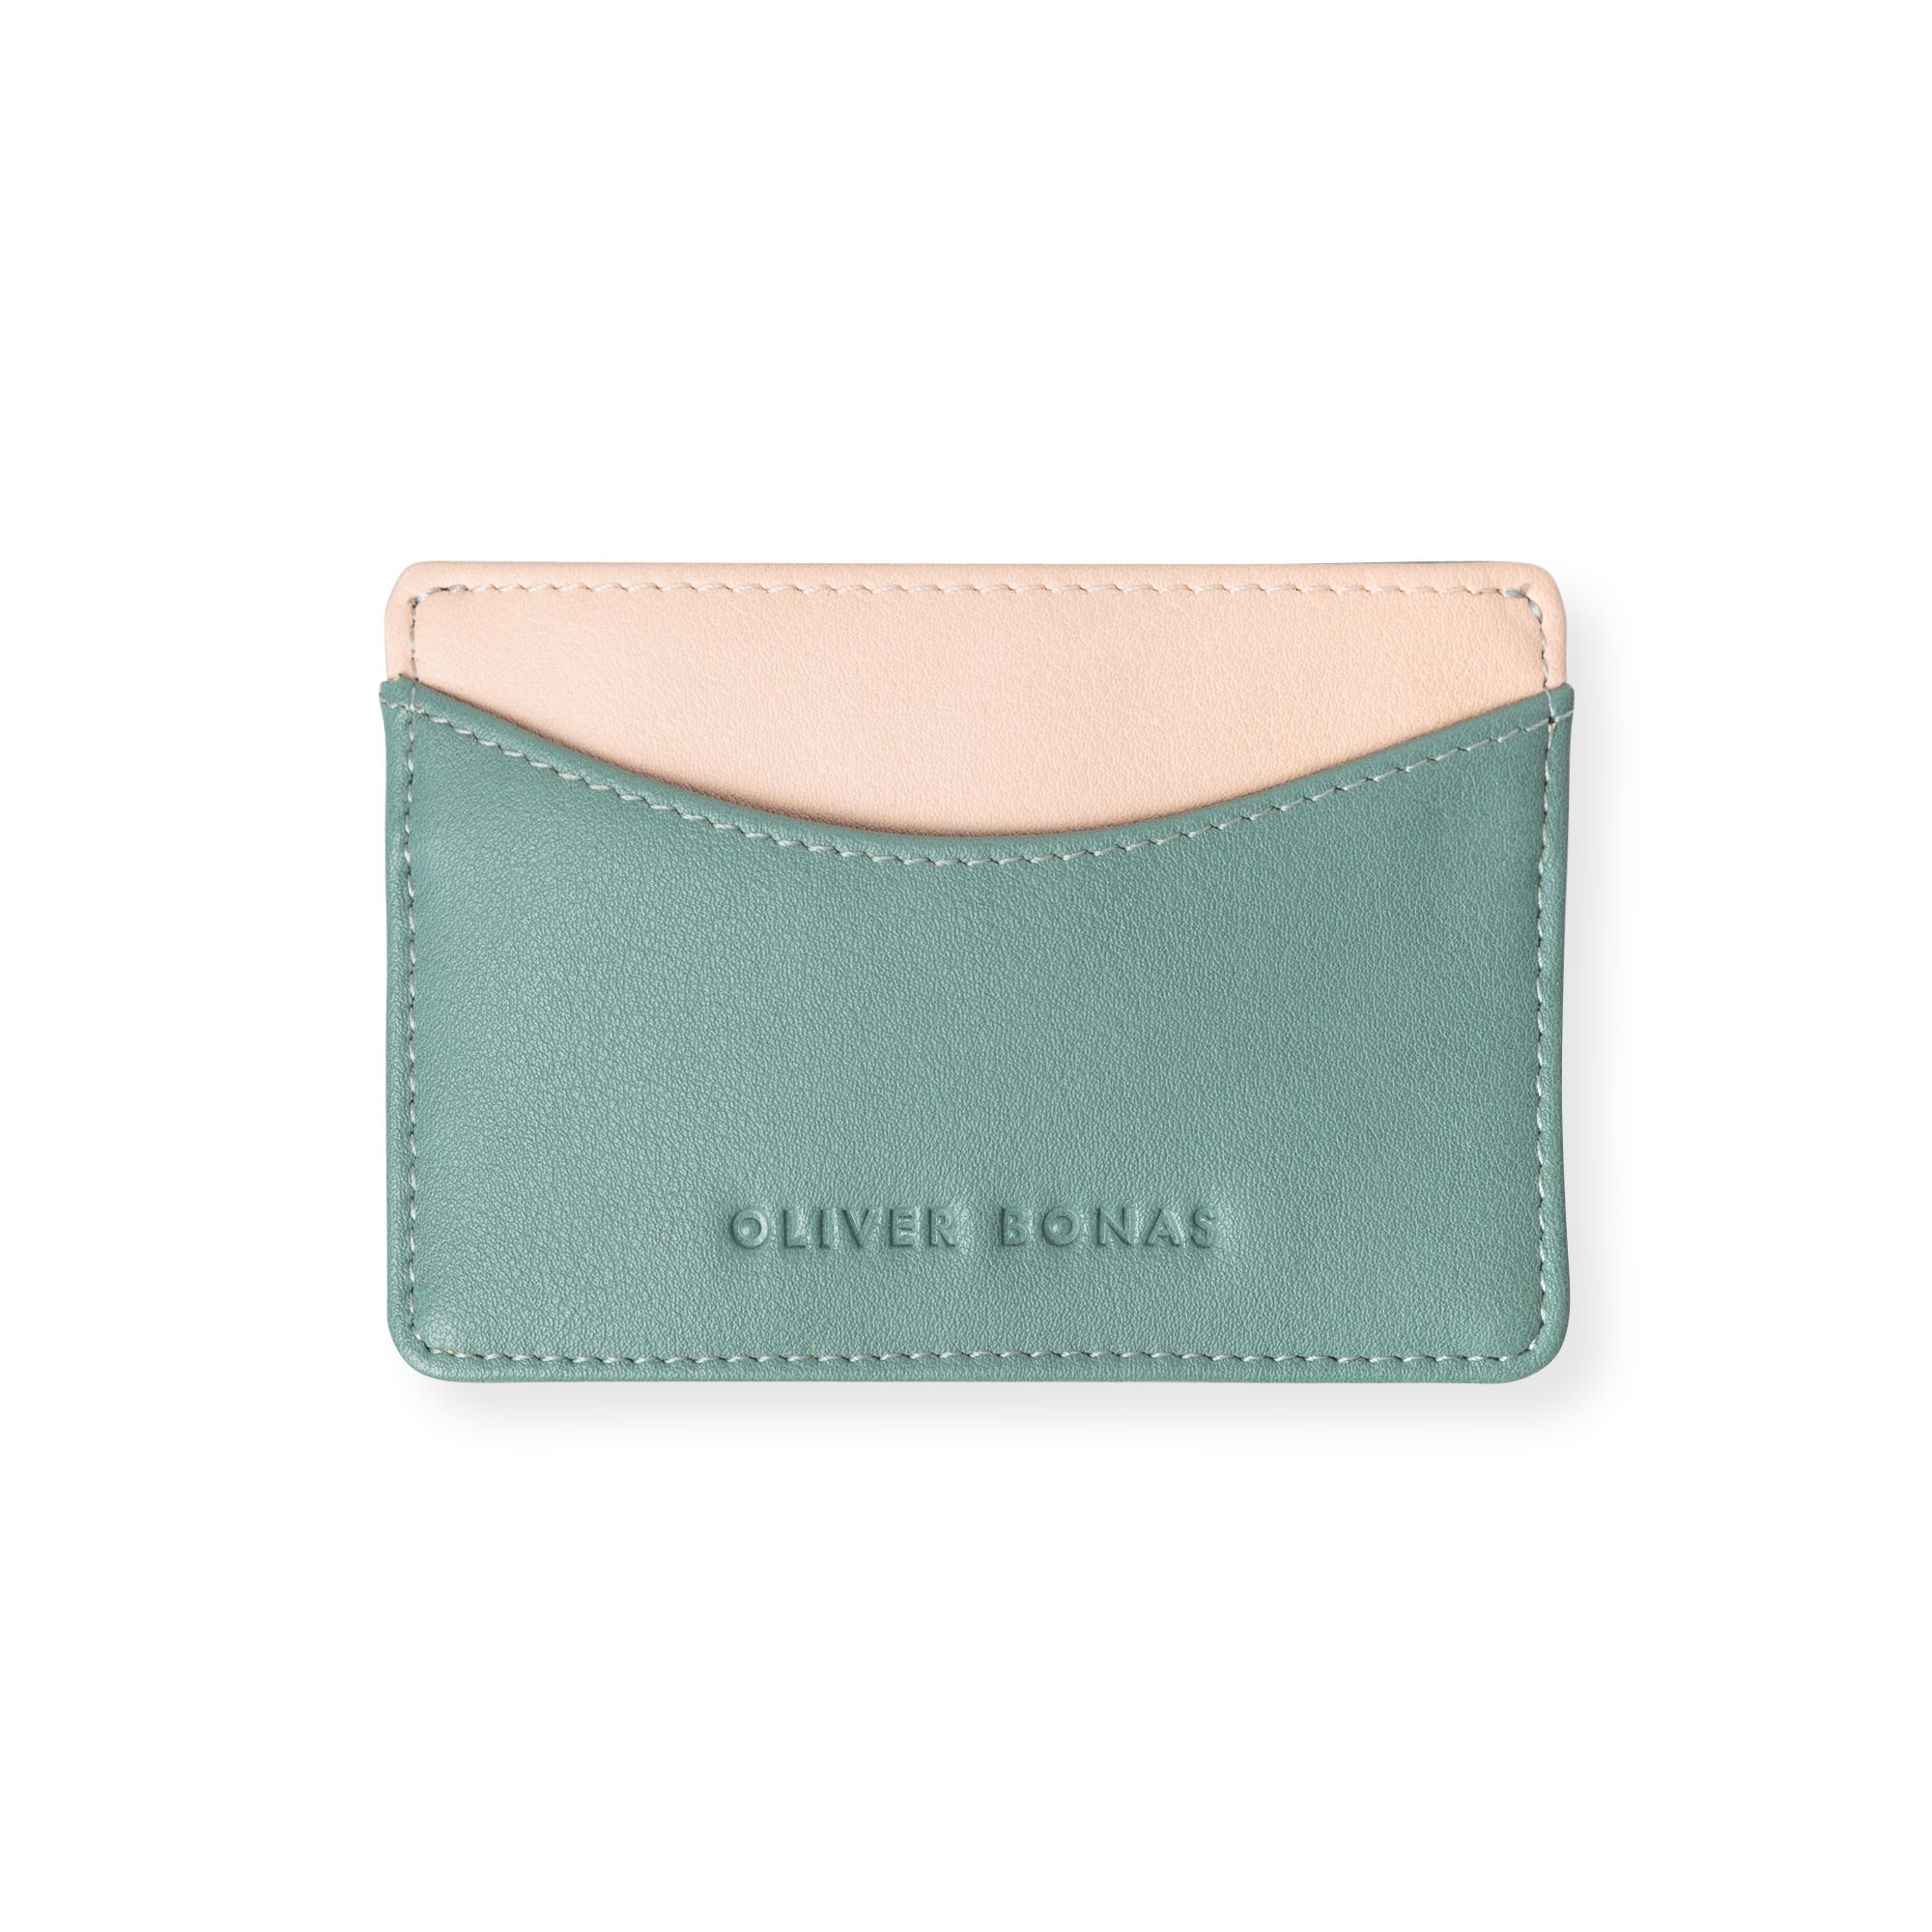 oliver bonas travel card holder